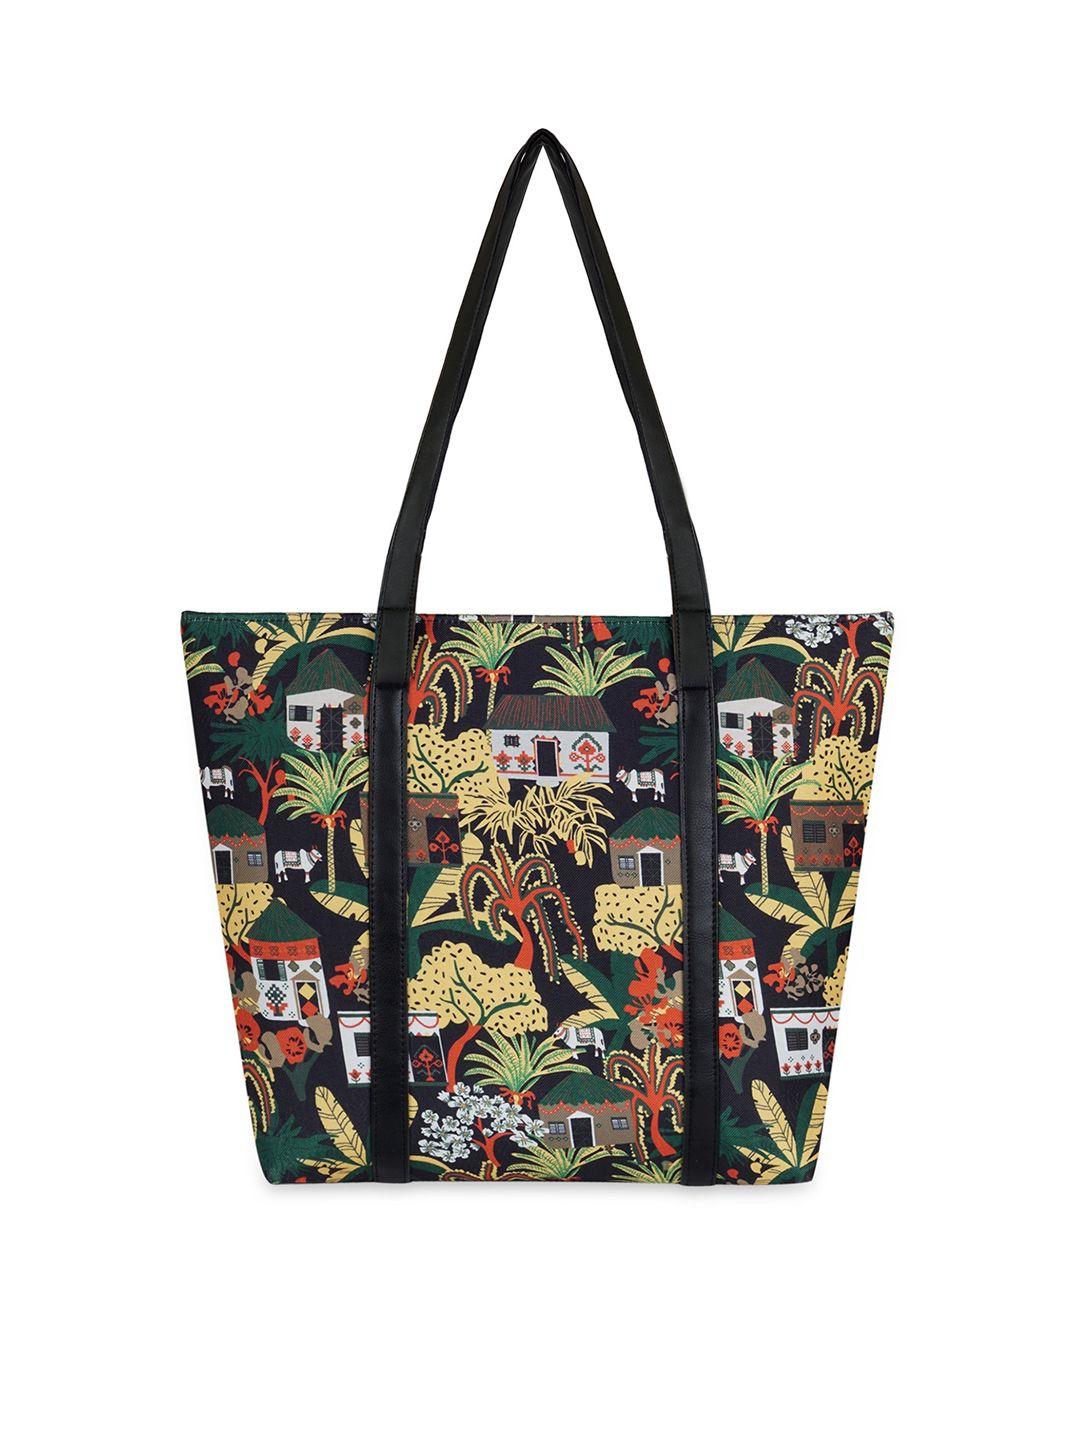 kanvas-katha-ethnic-motifs-printed-shopper-tote-bag